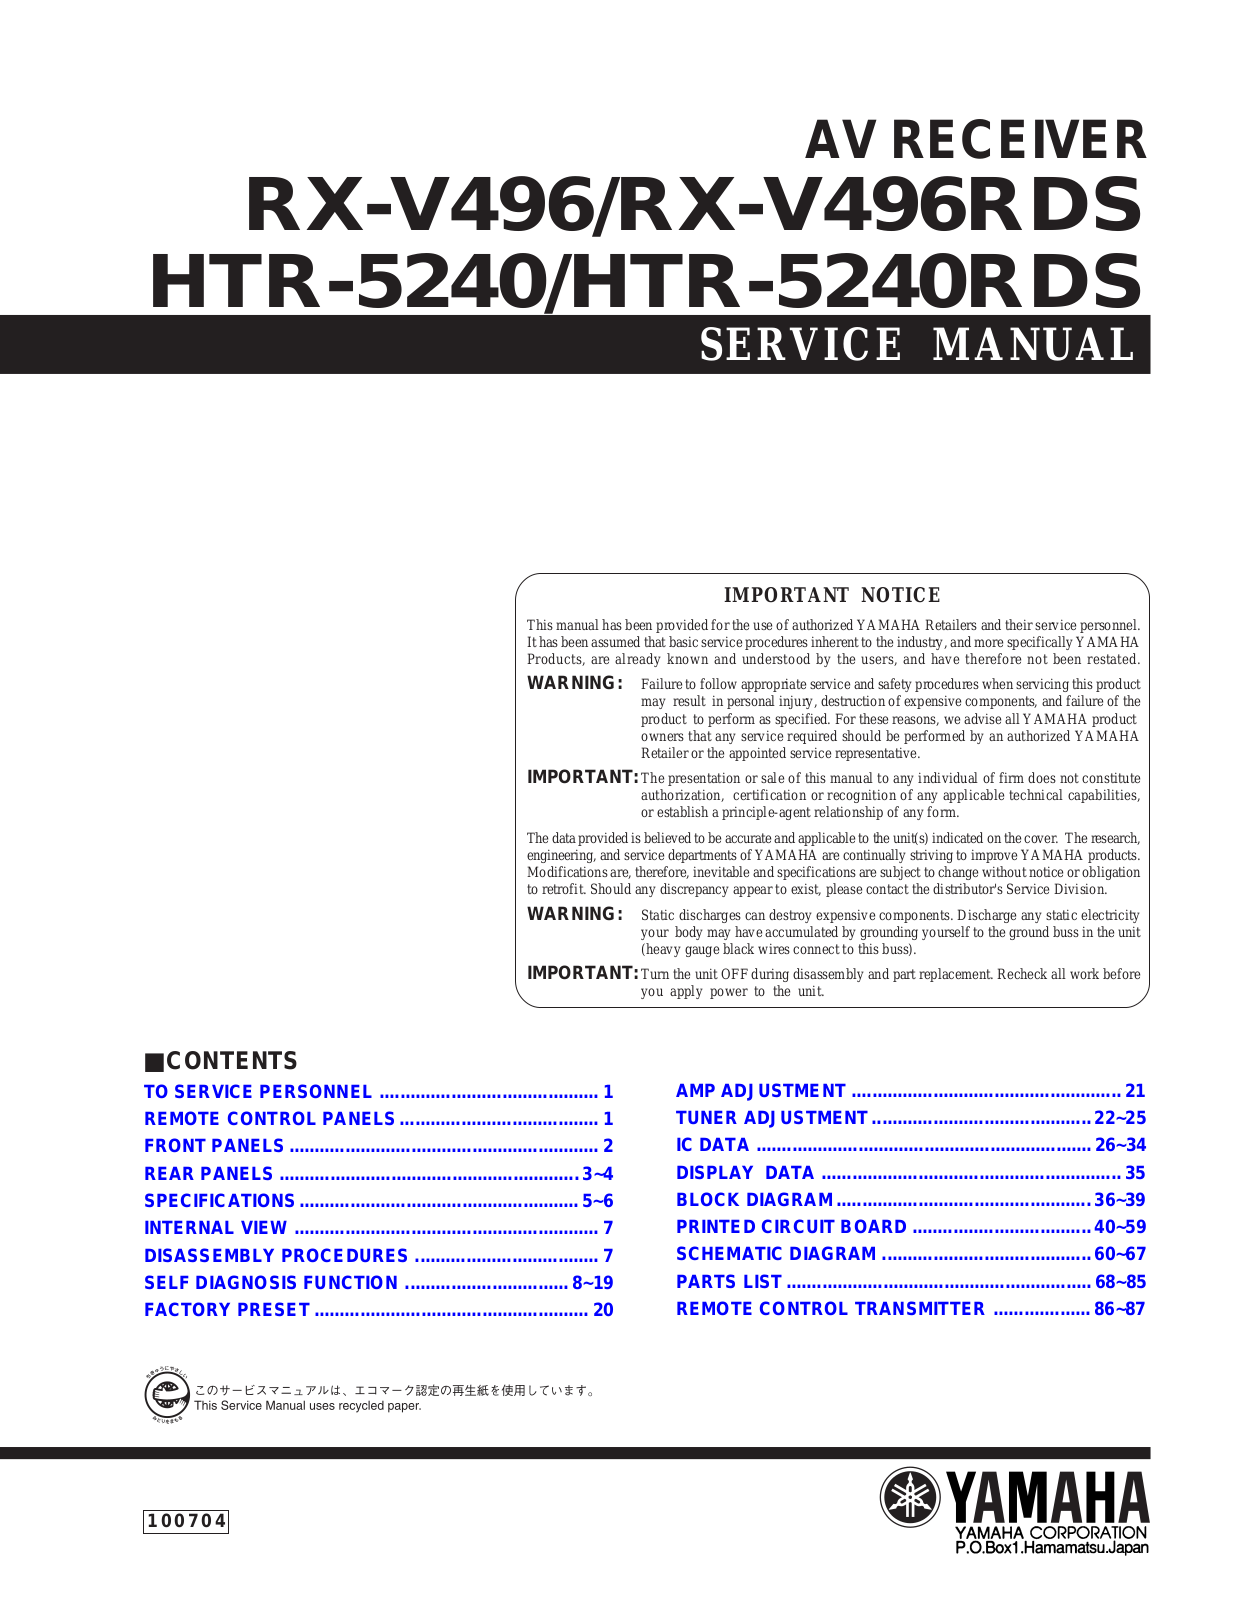 Yamaha HTR-5240 Service manual